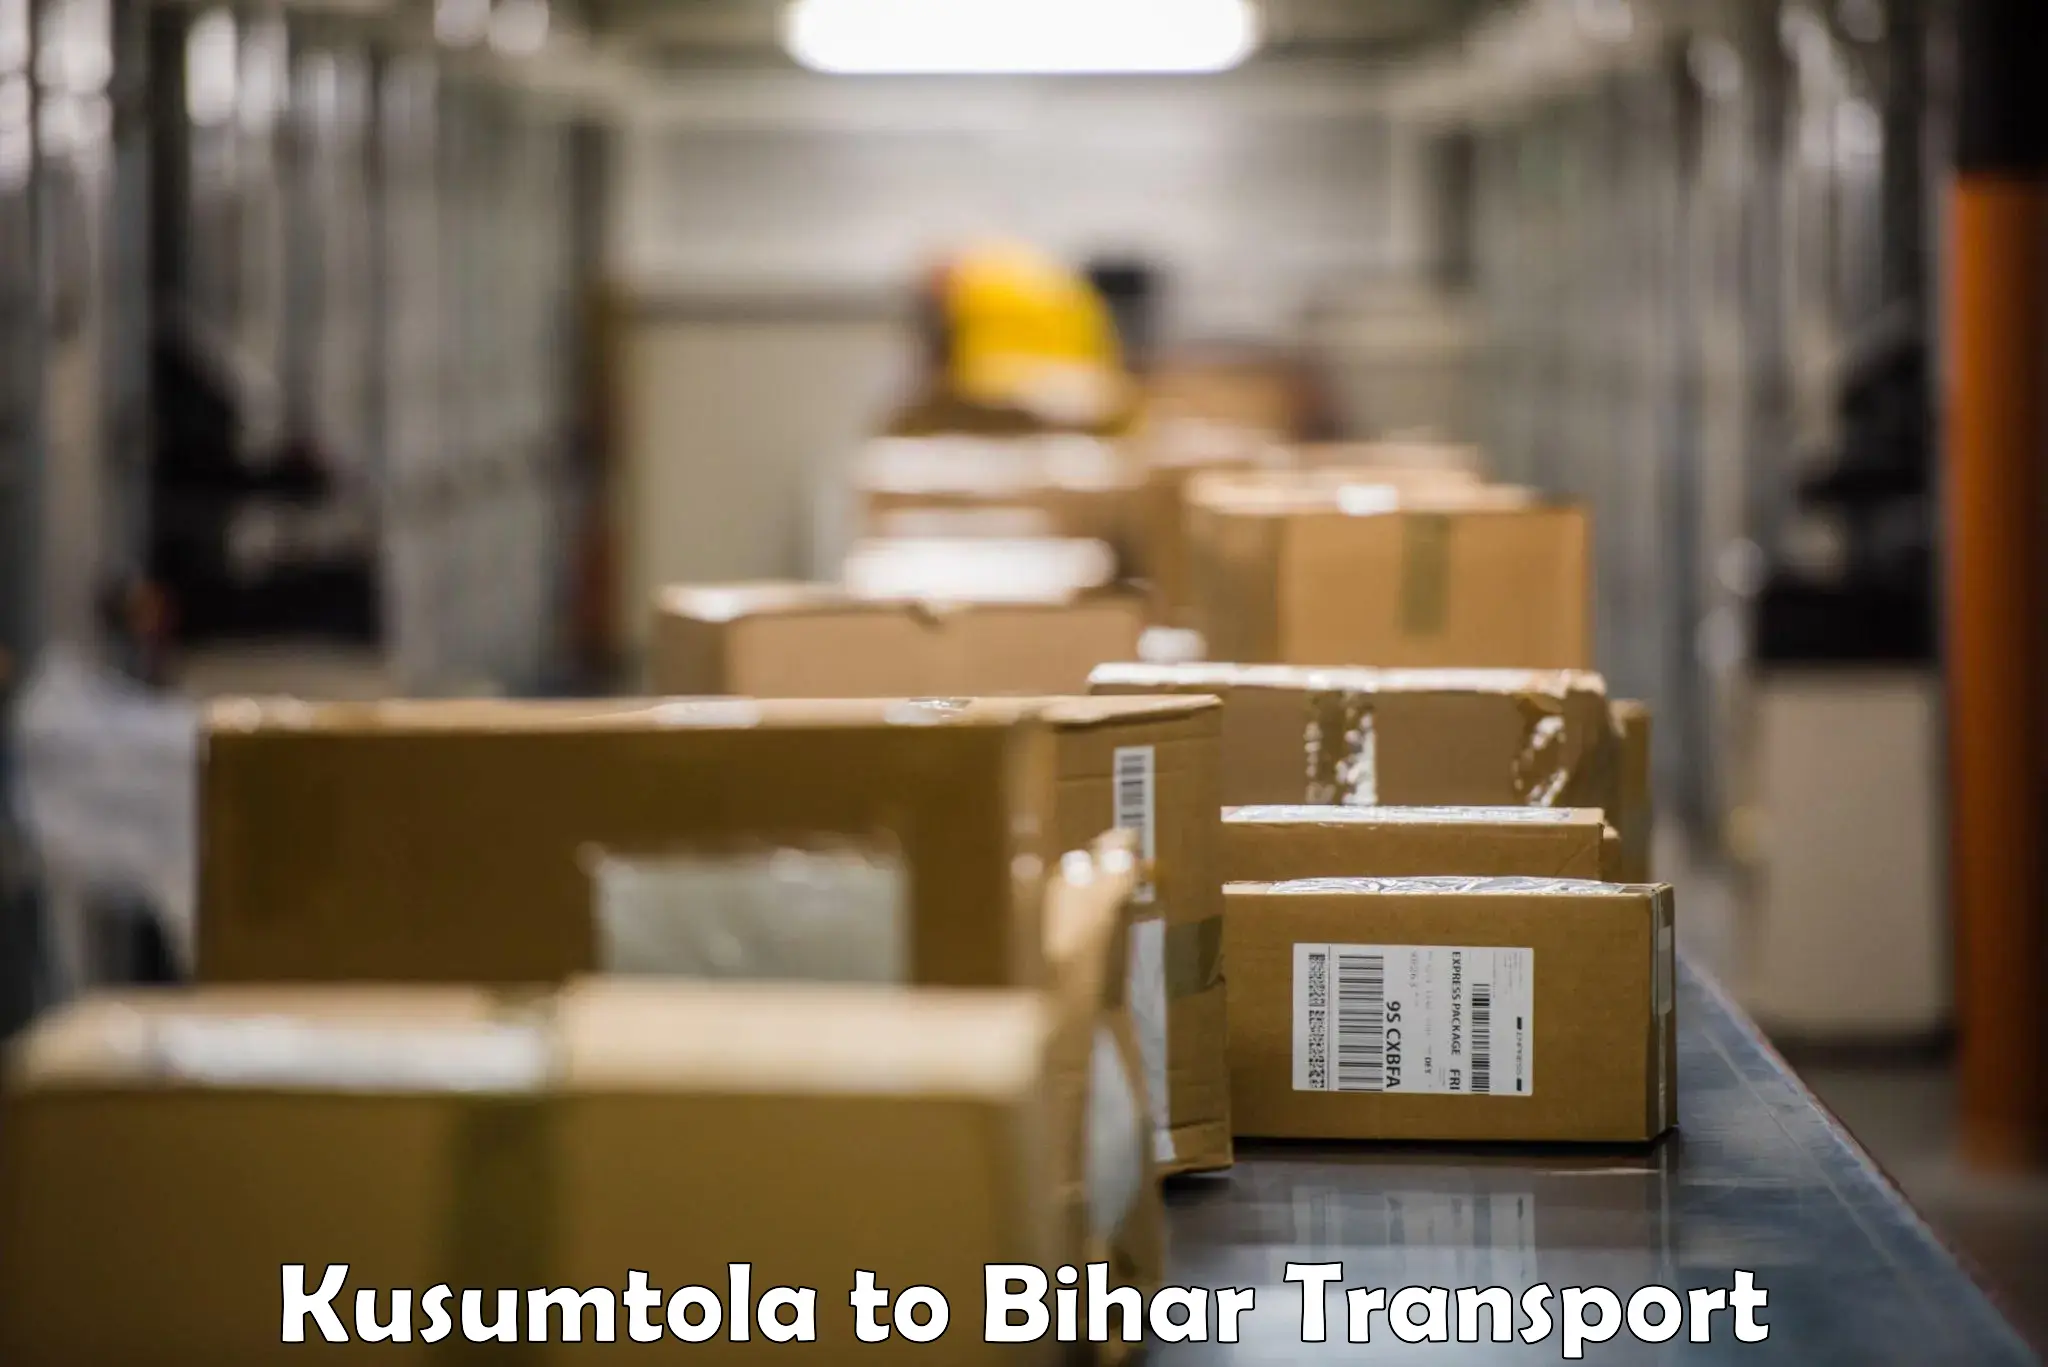 Truck transport companies in India Kusumtola to Piro